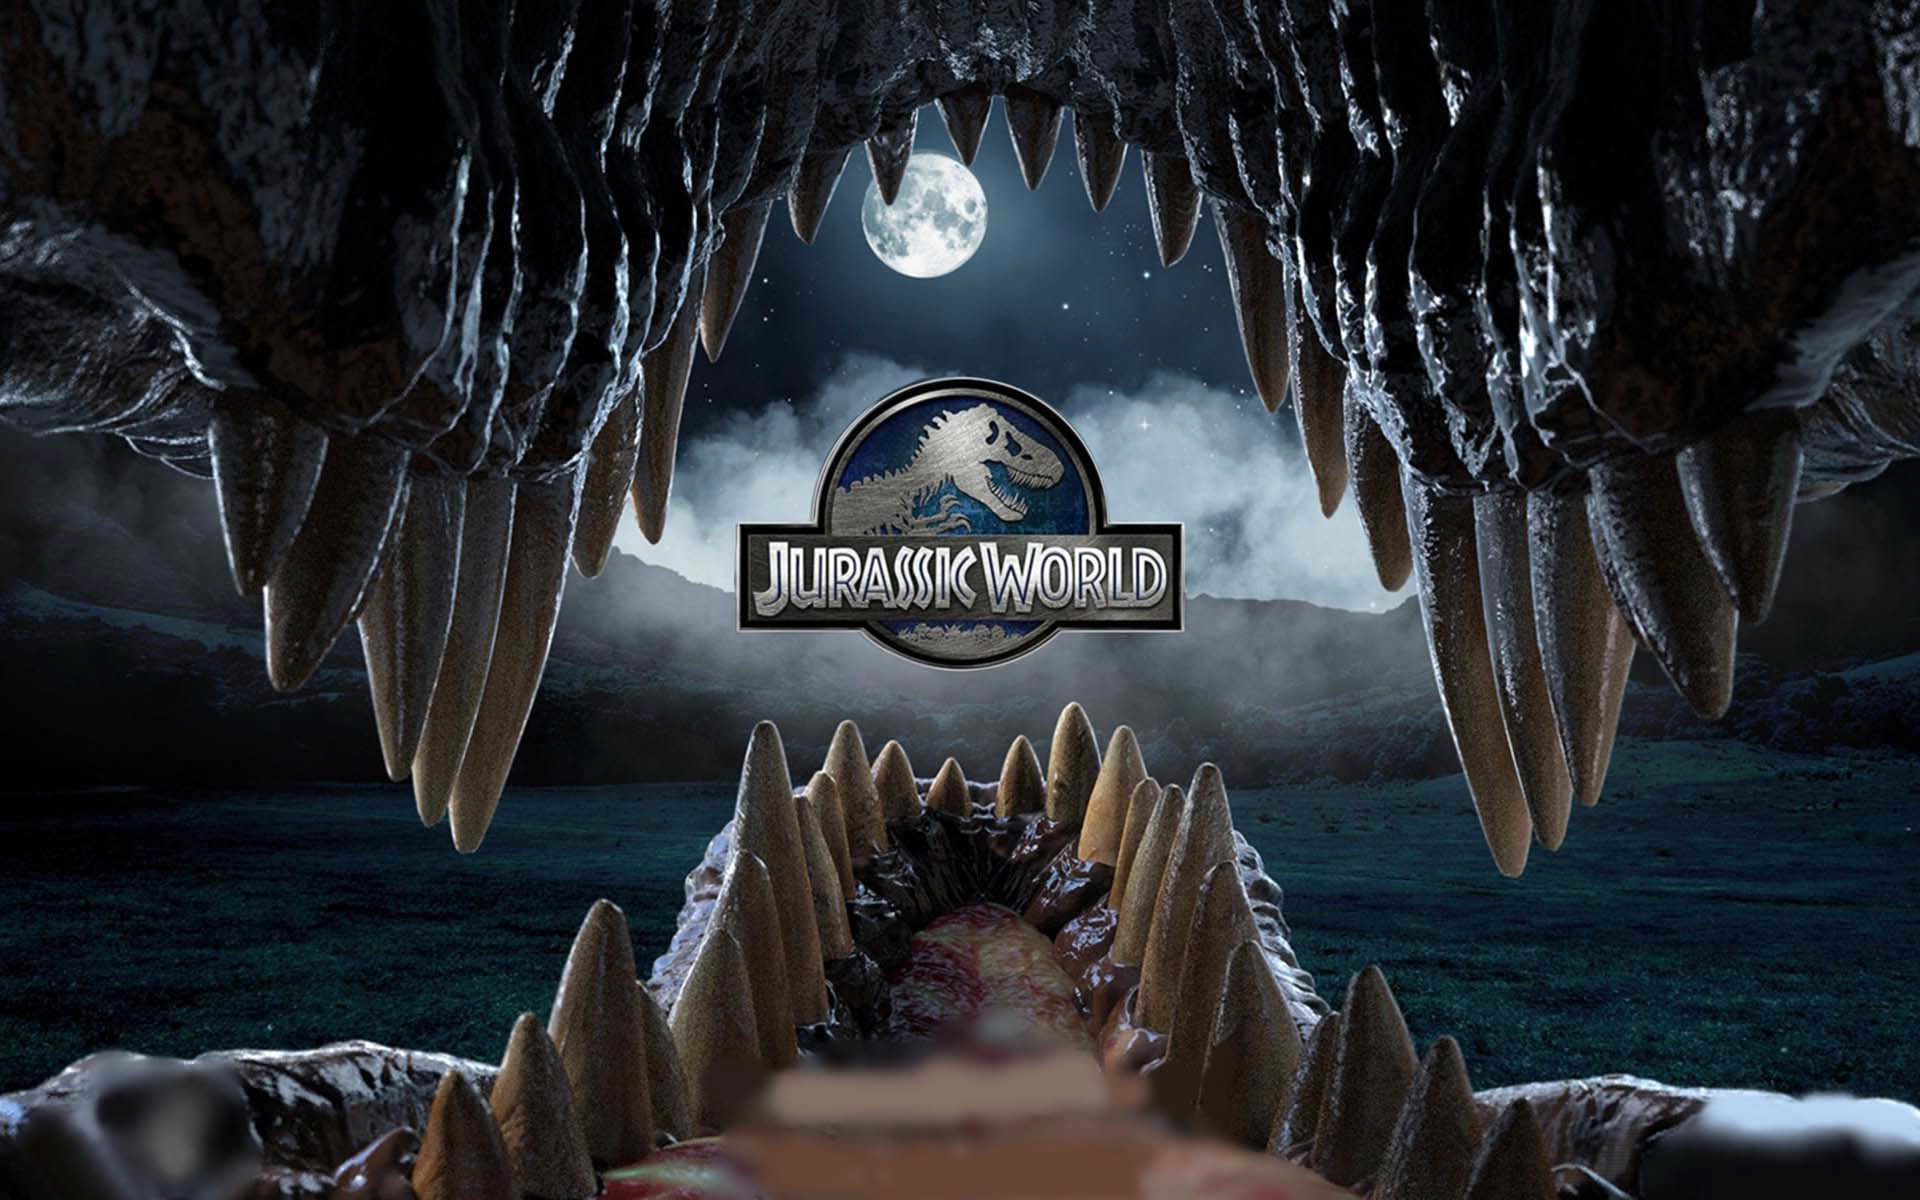 free download Jurassic Park